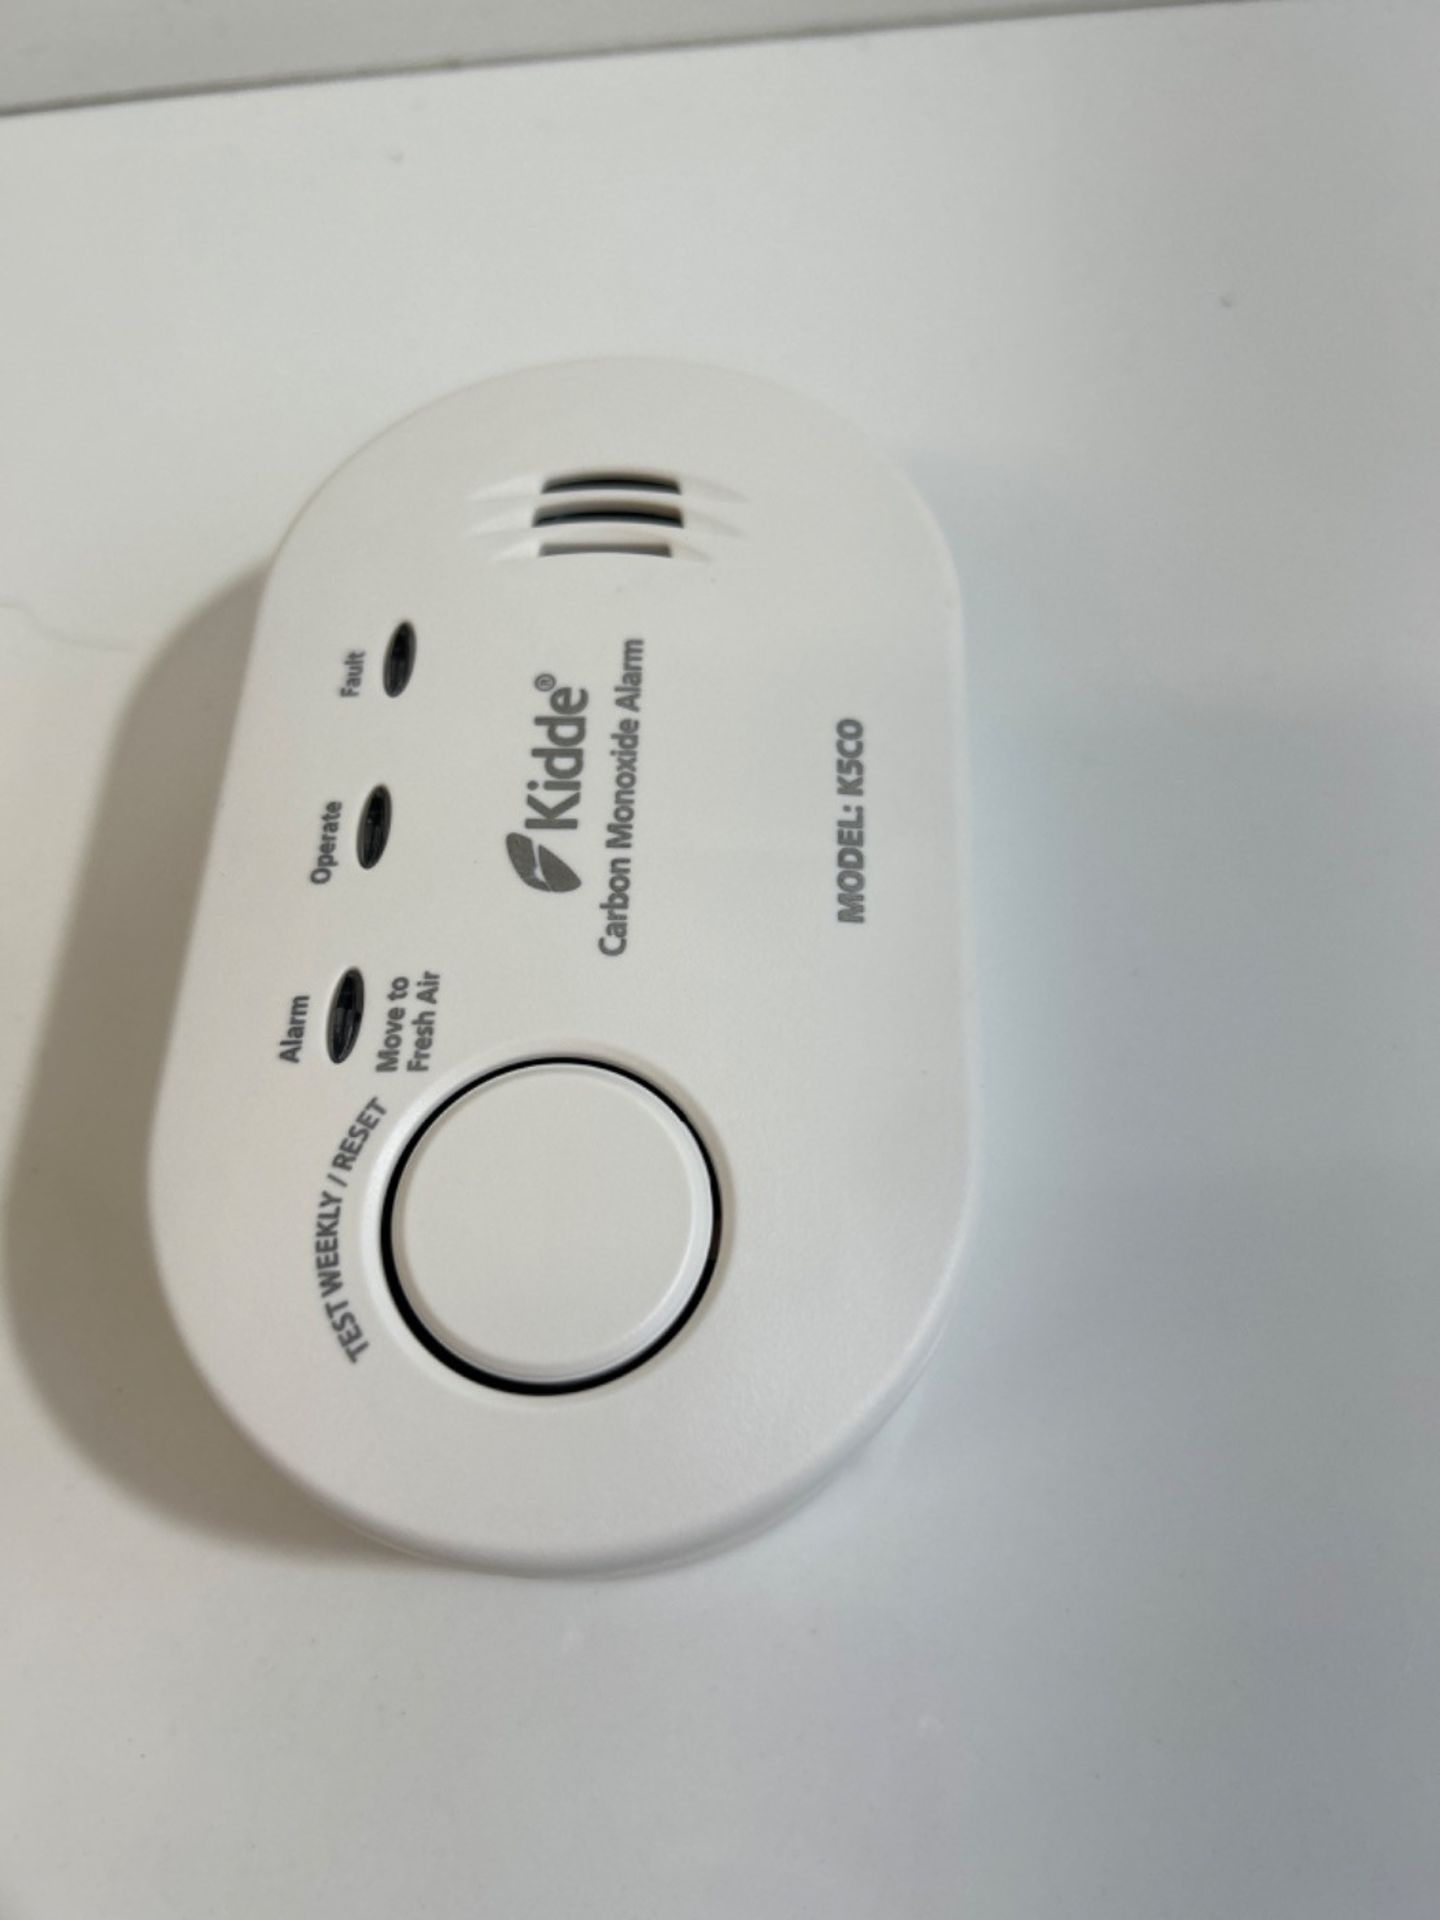 Kidde Carbon Monoxide Alarm - Image 3 of 3